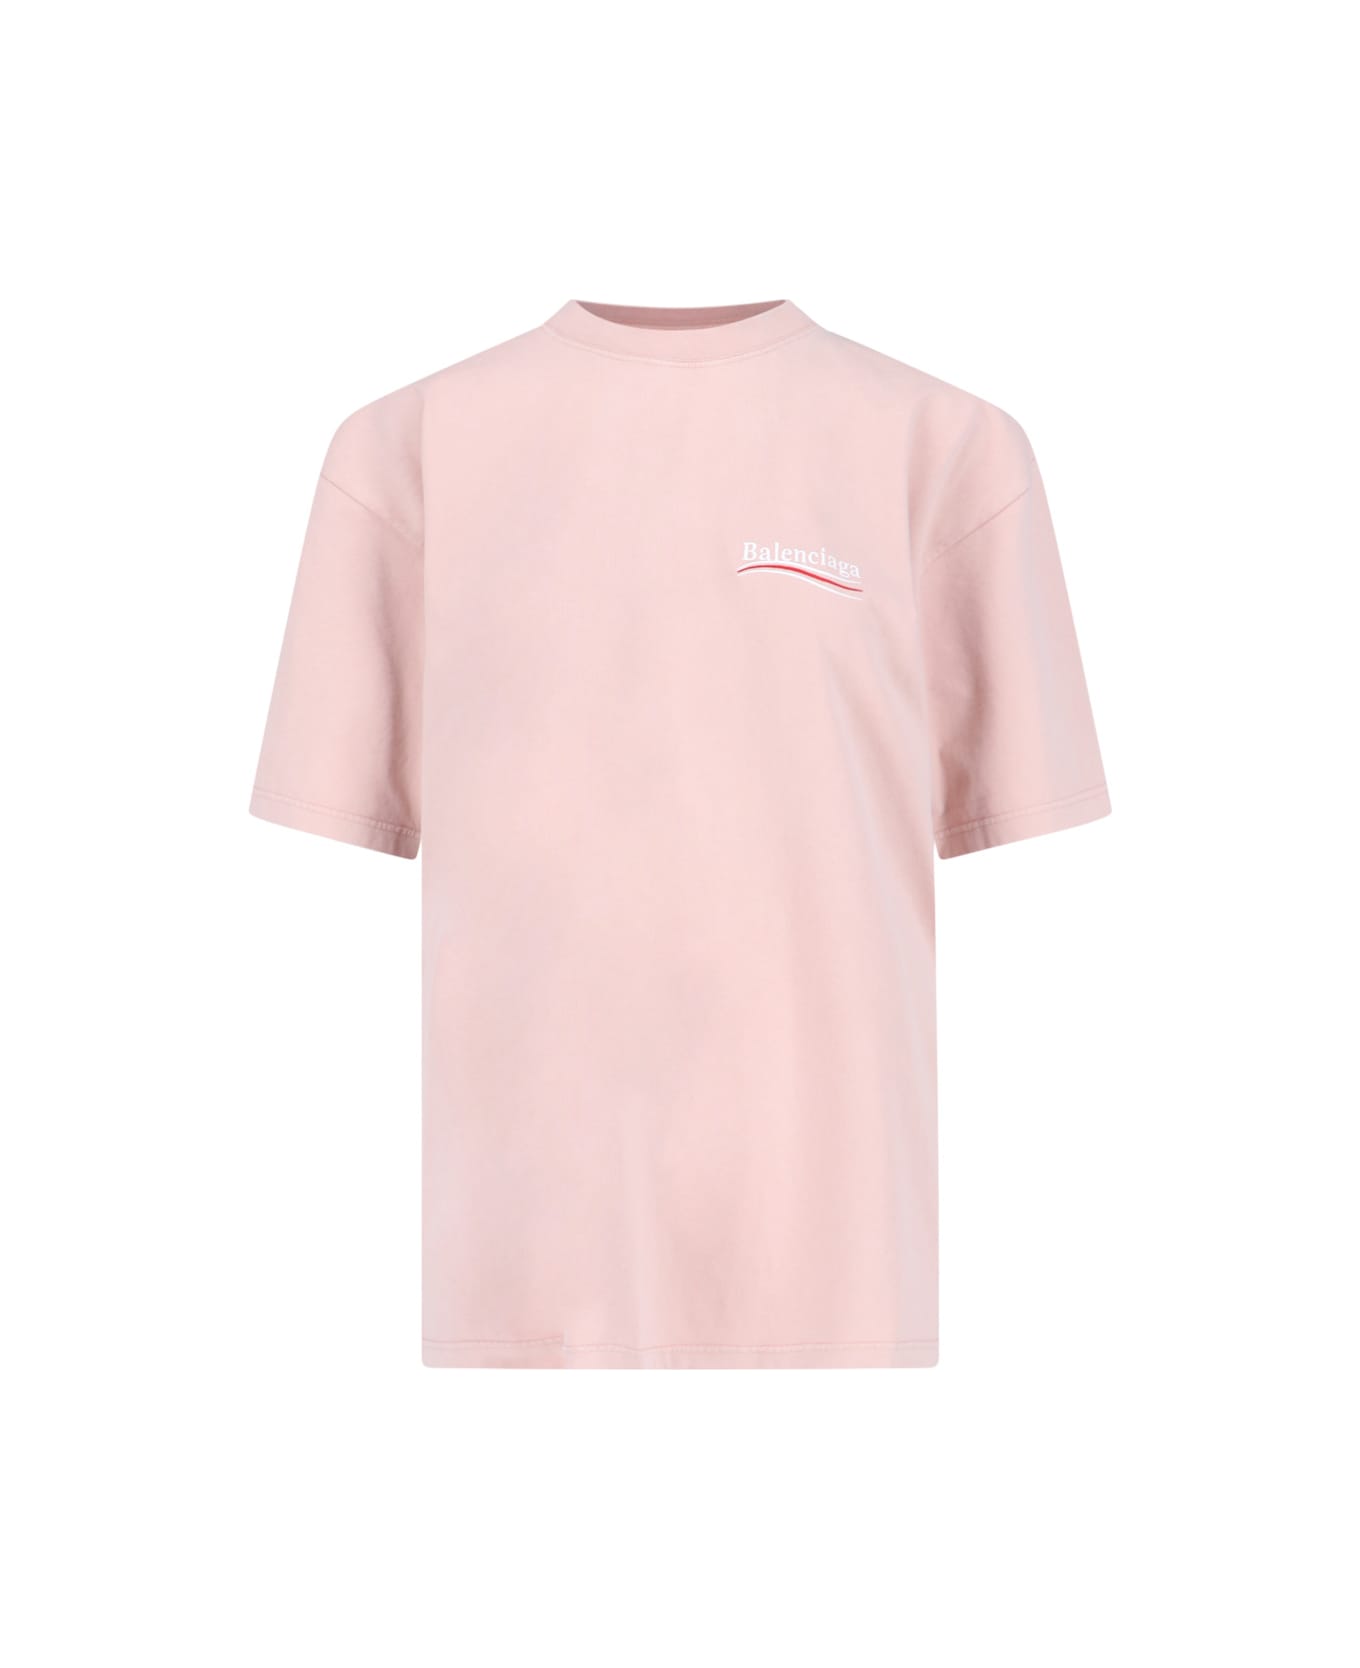 Balenciaga Back Logo T-shirt - Pink